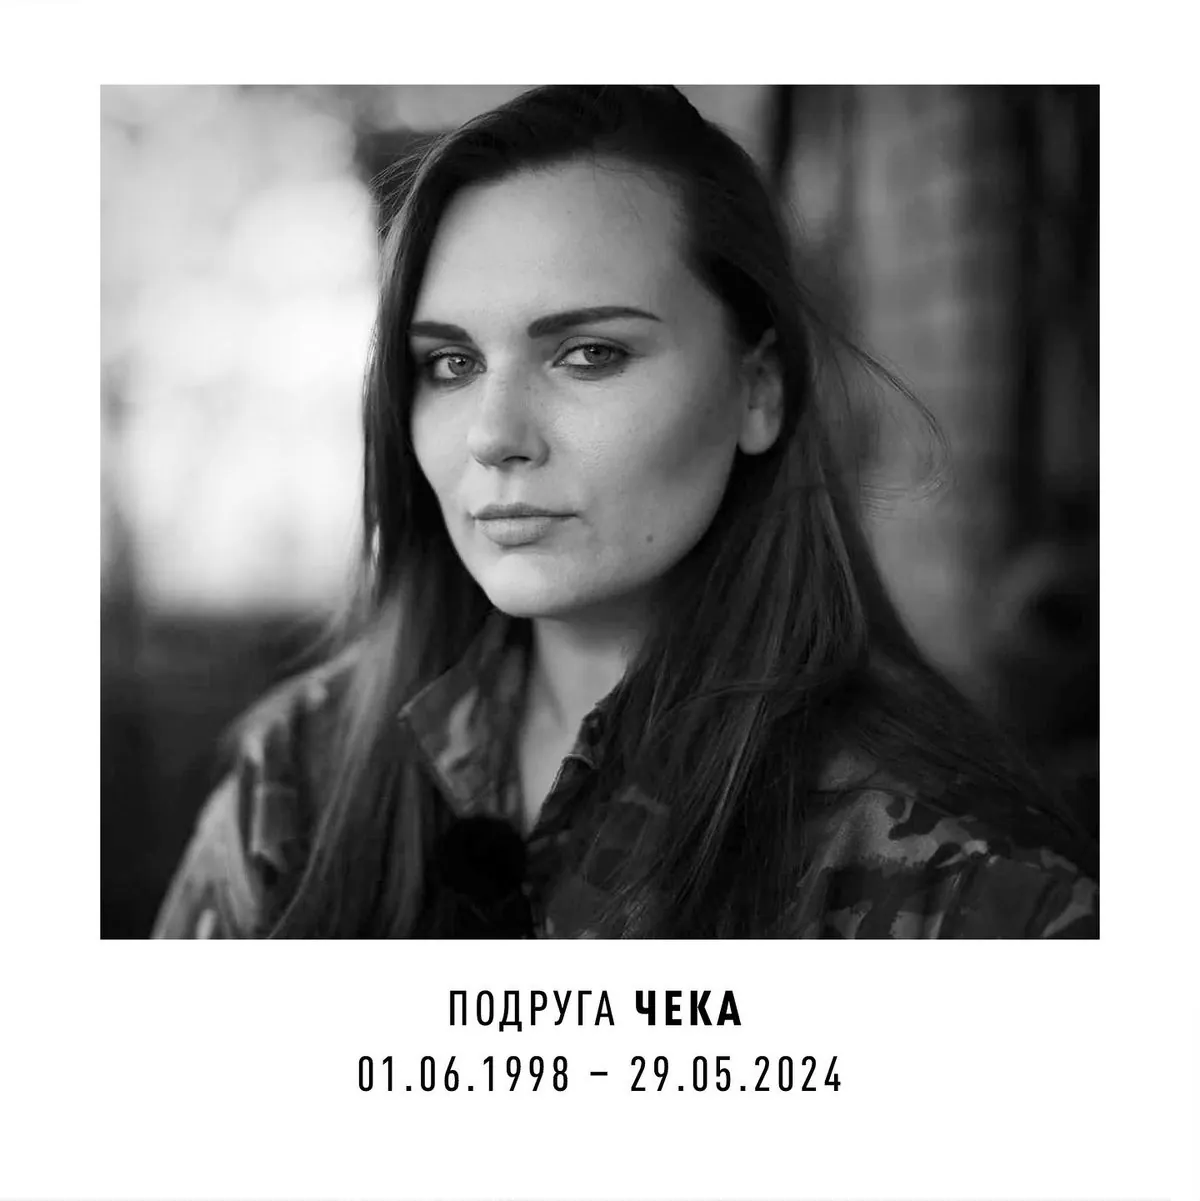 Irina "Cheka" Tsybukh, a paramedic of the Hospitallers battalion, was killed